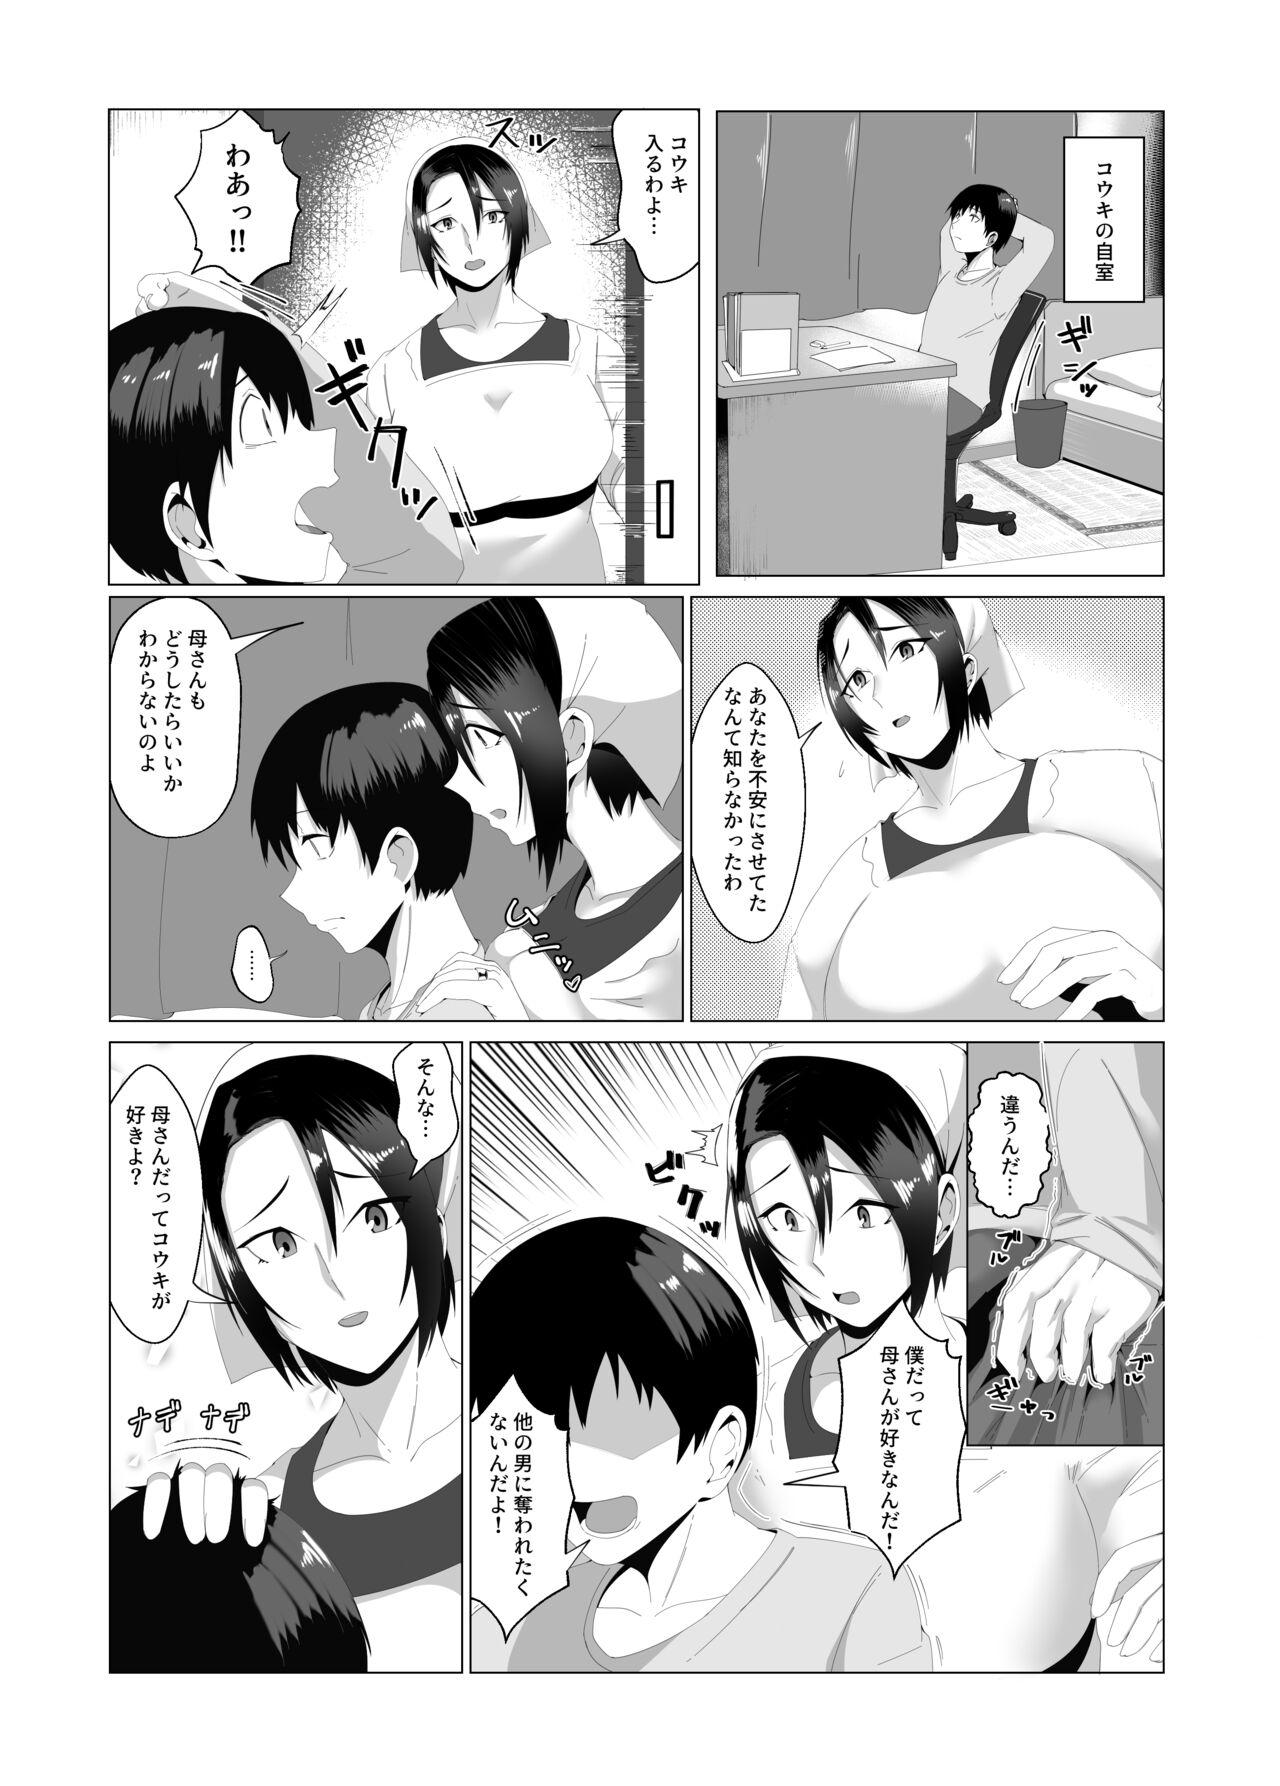 T Girl Kaasanwa kanbanmusume nikuyokuni kogaretaboshino futsuya Bdsm - Page 4